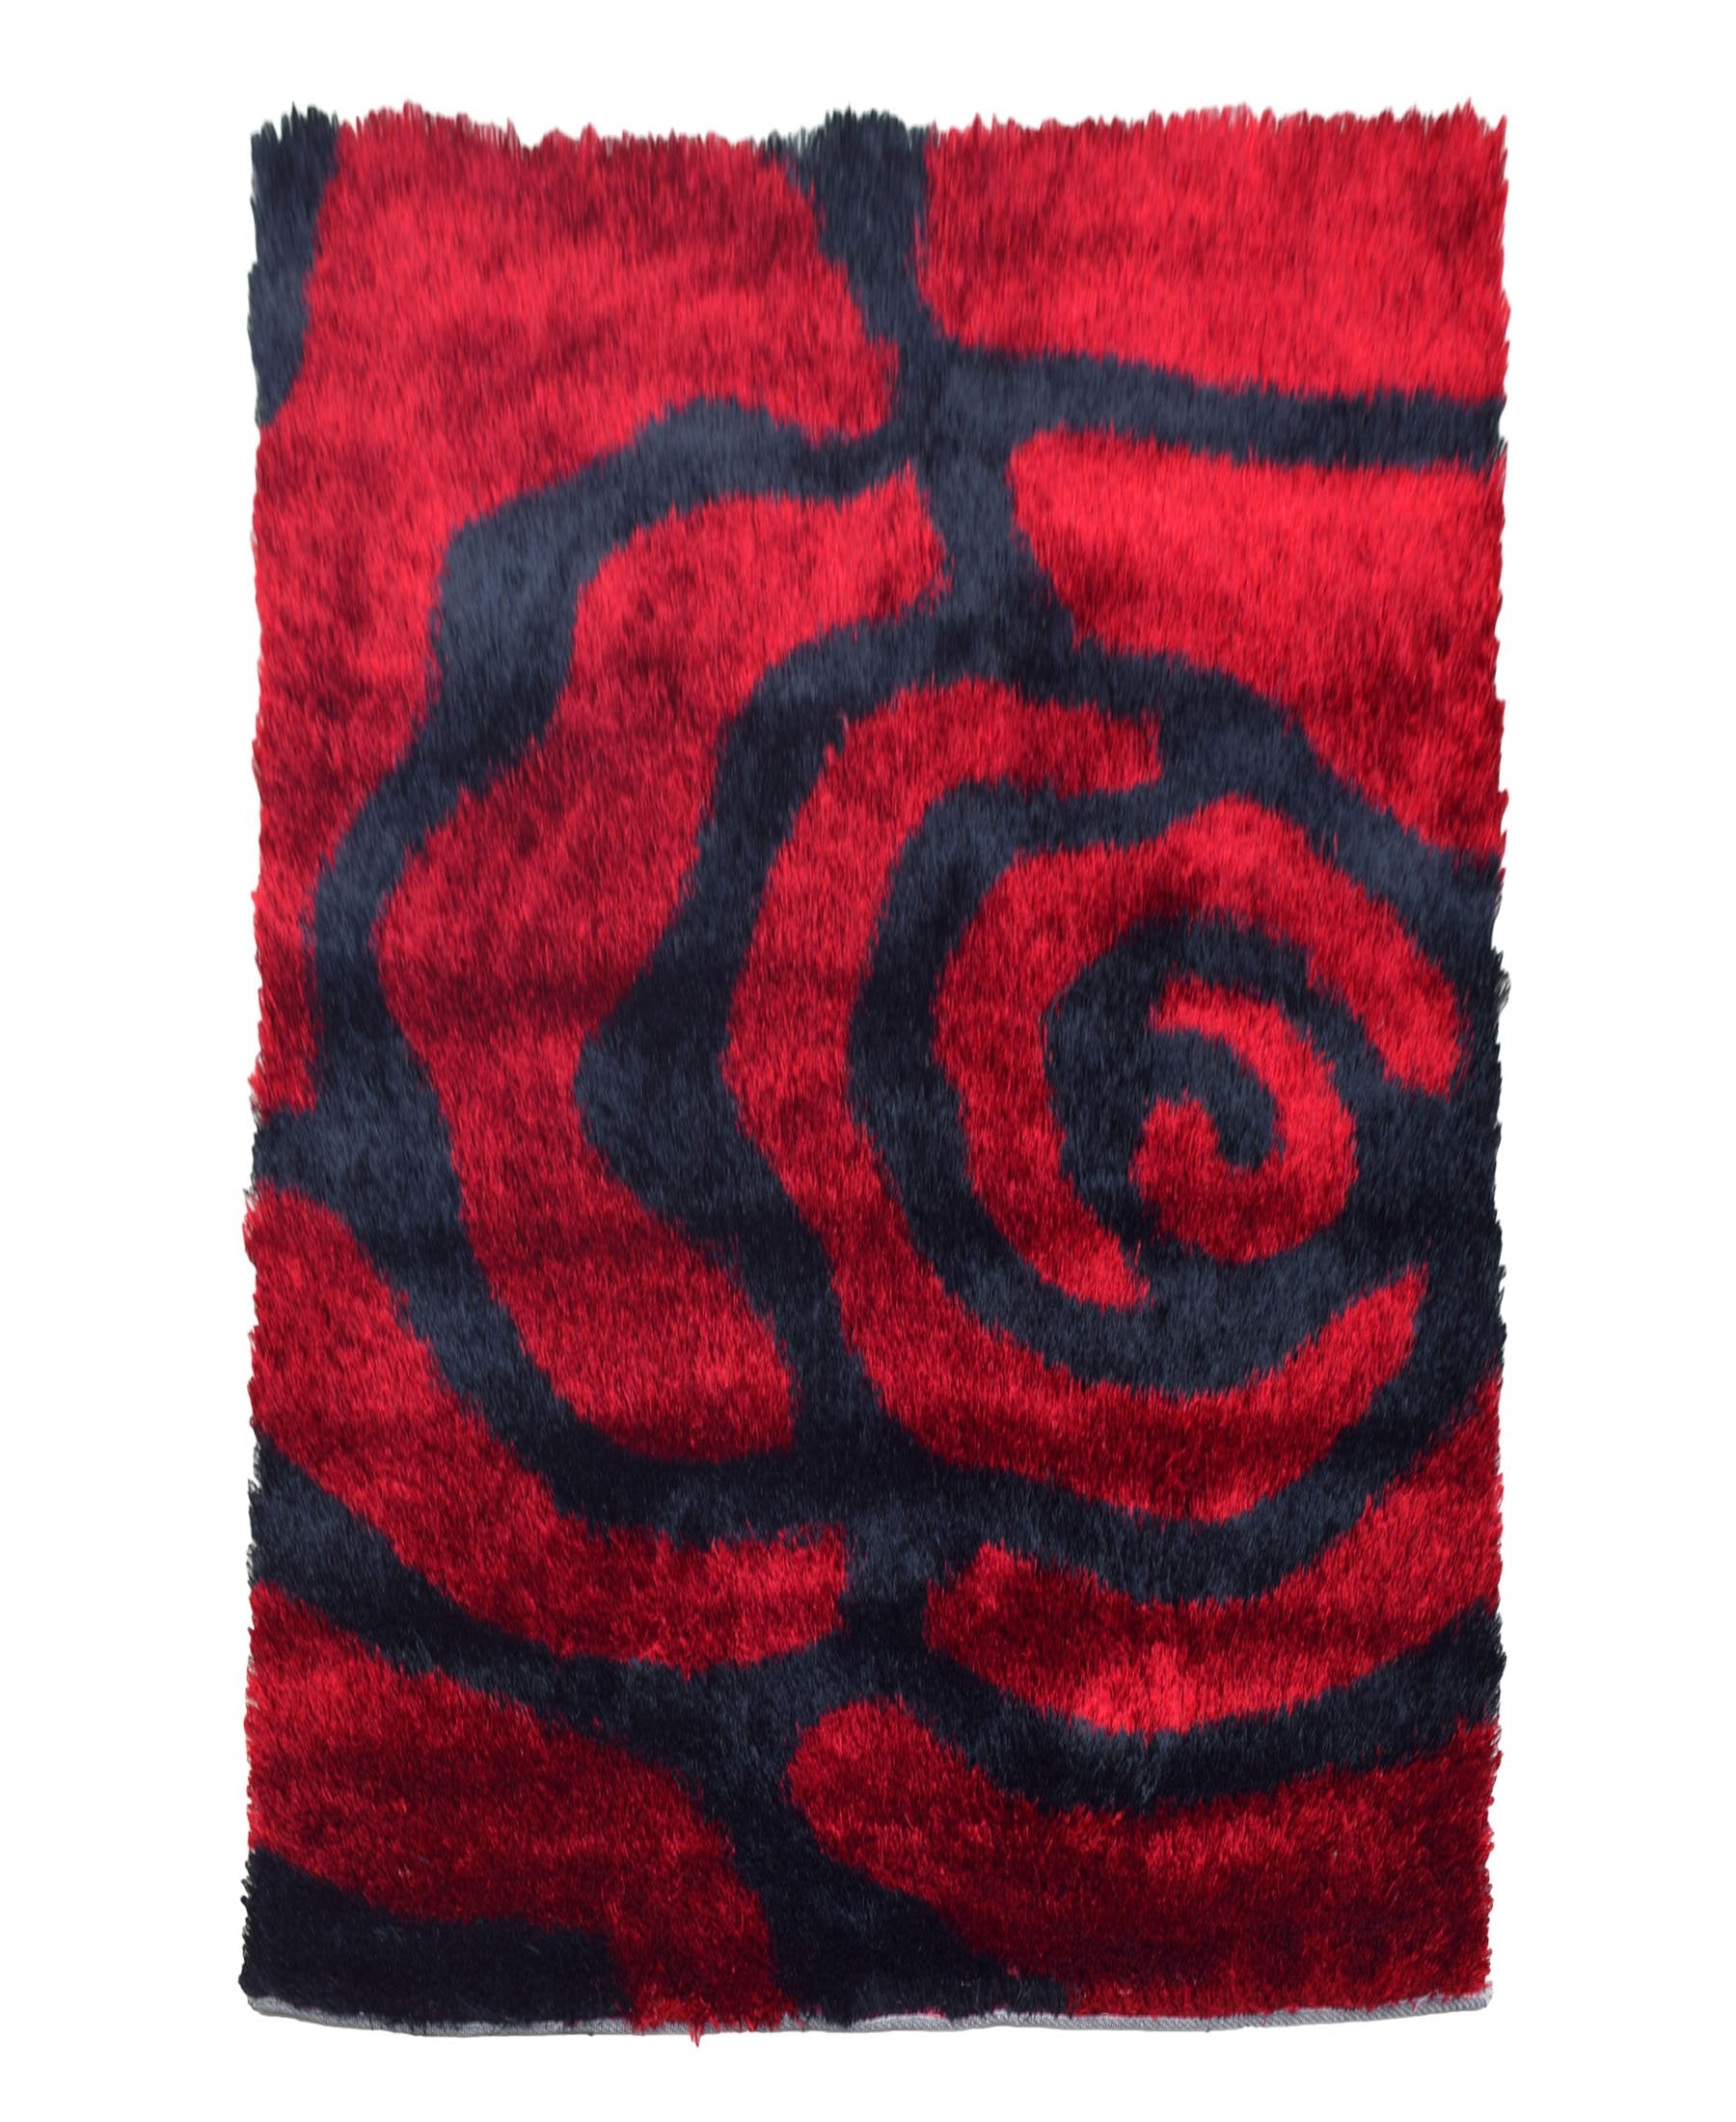 Shaggy Rose Carpet 800mm x 1500mm - Red